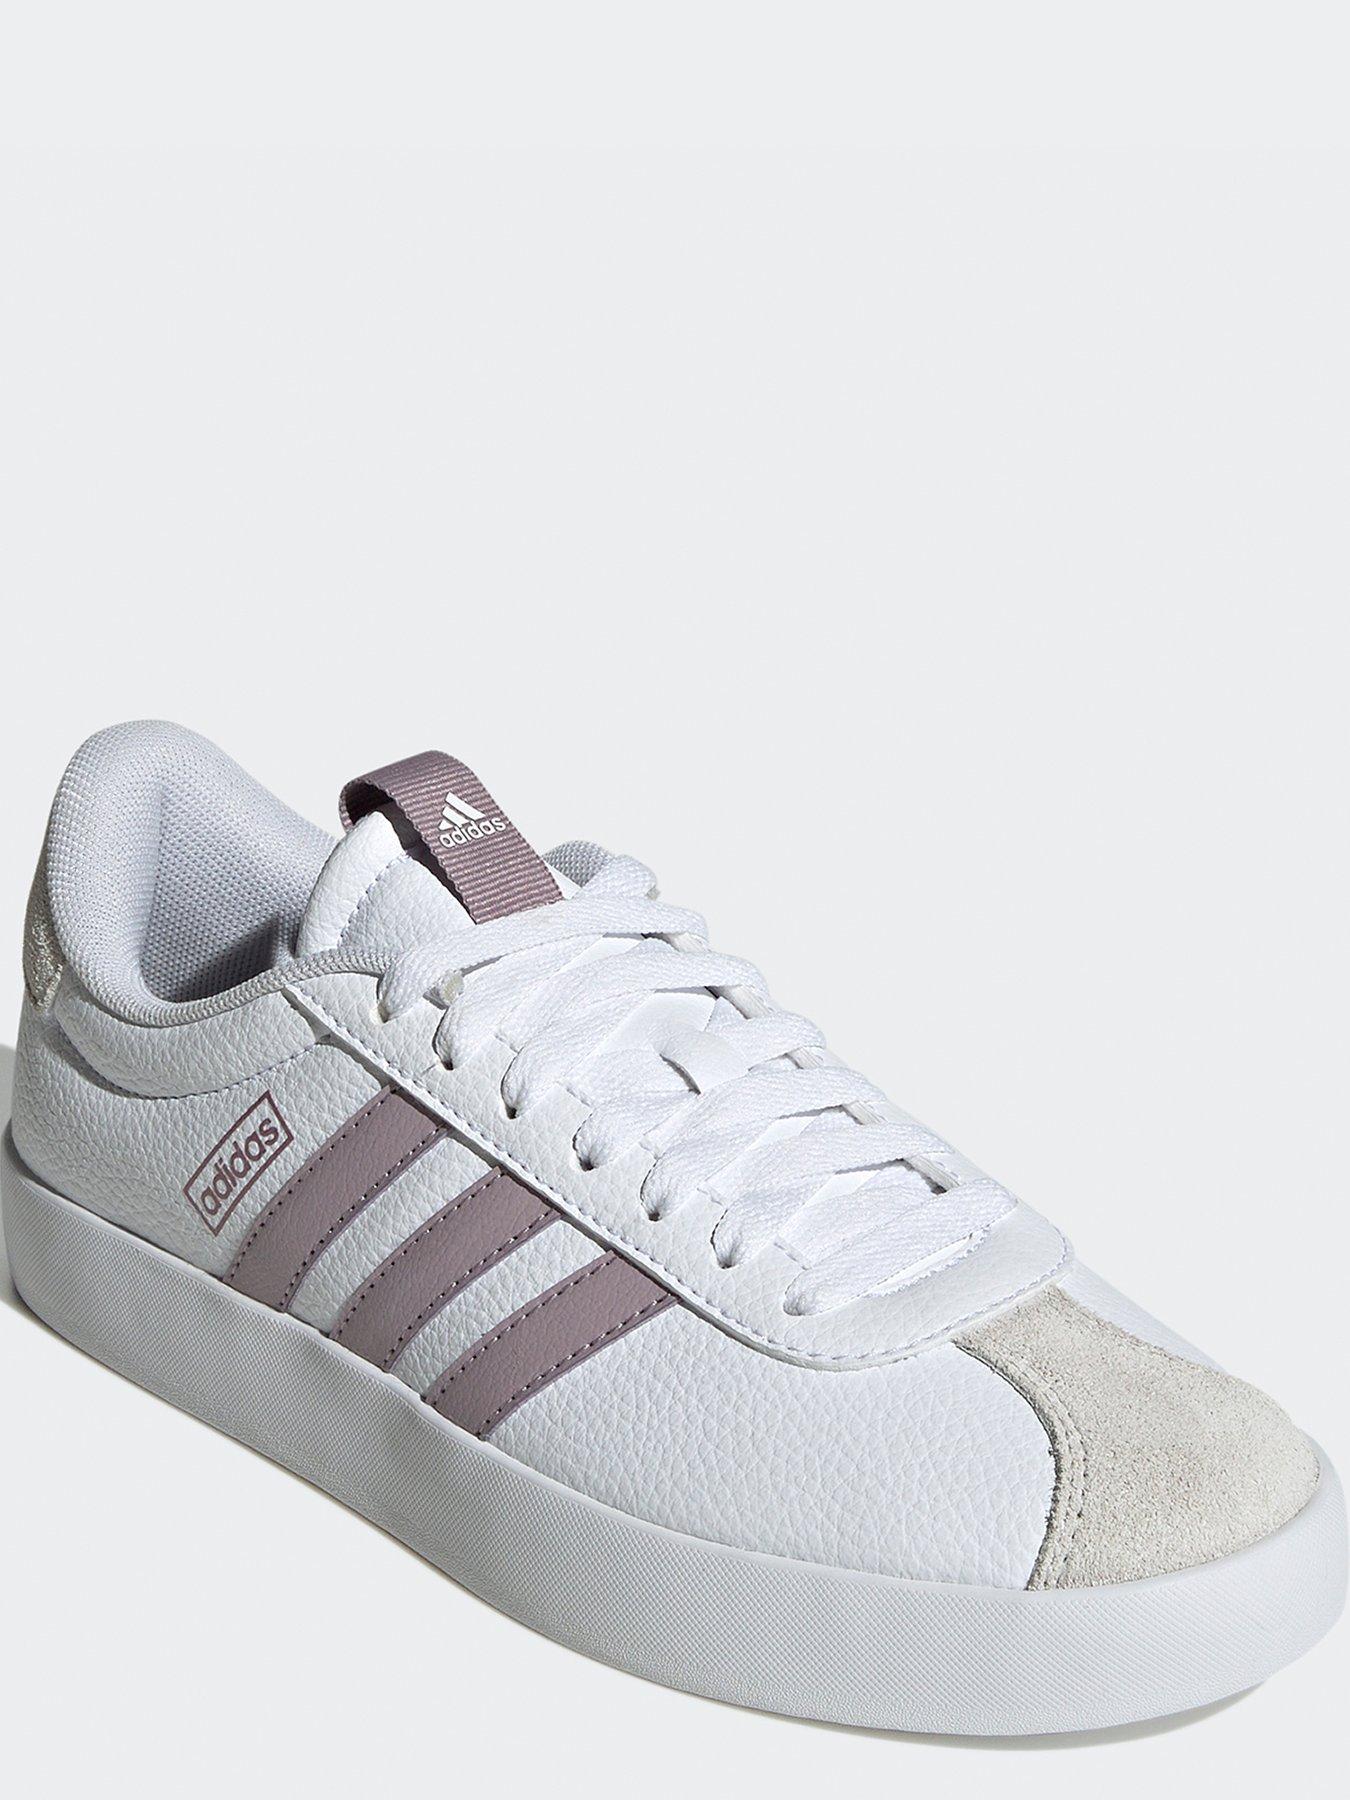 Adidas Mens Vl Court 3.0 Sneaker - Grey